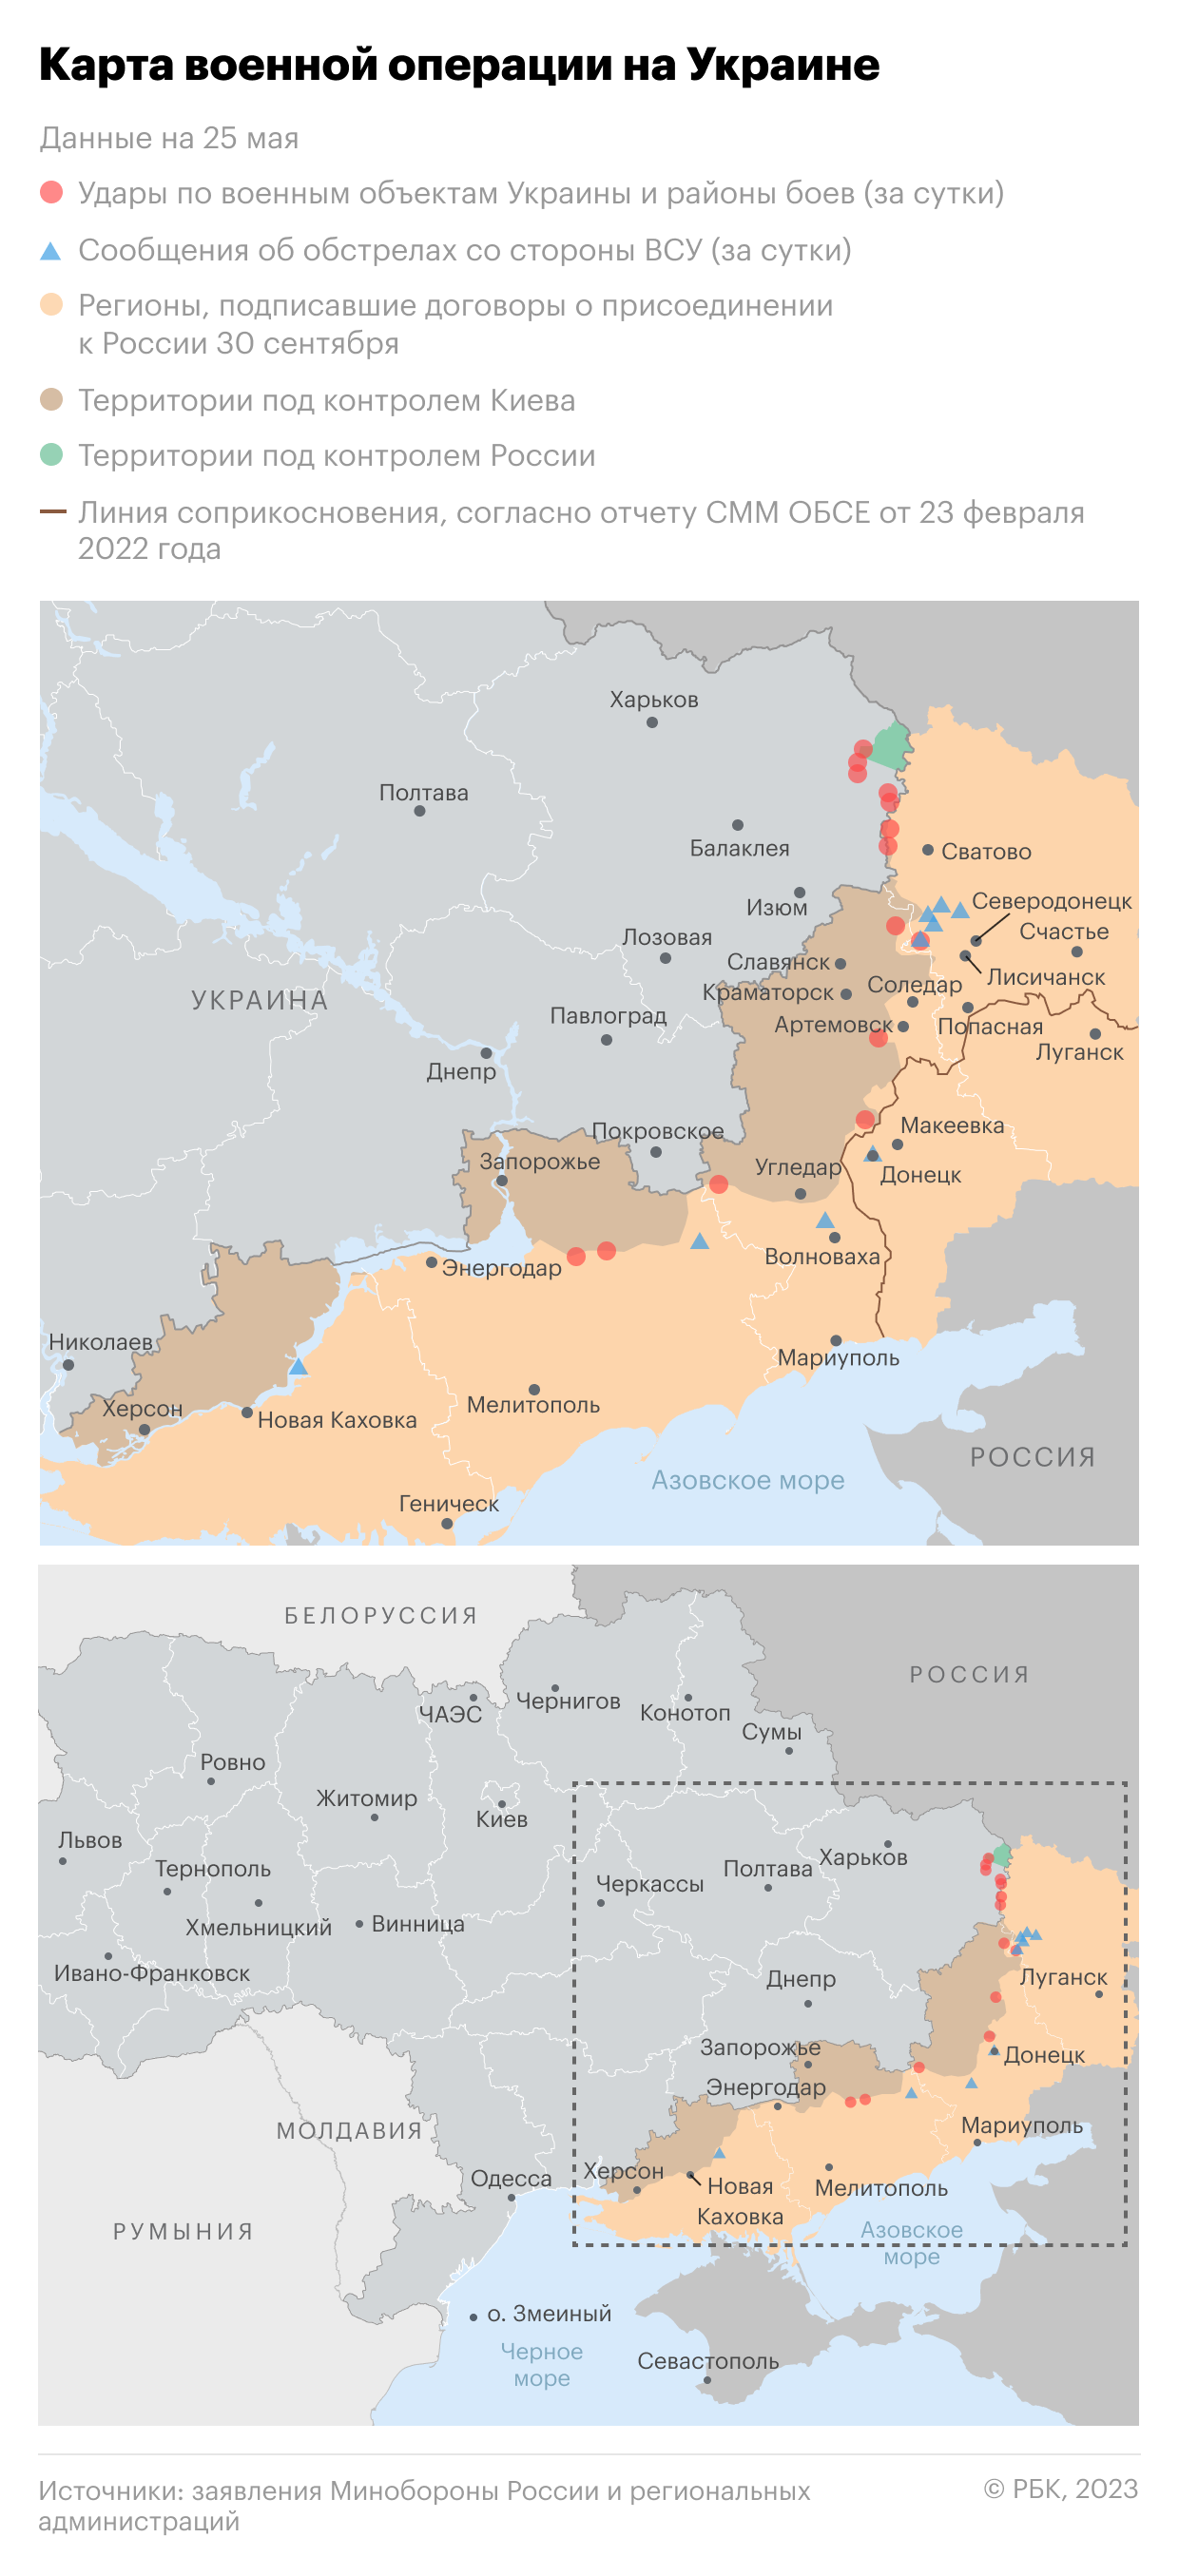 Военная операция на Украине. Карта на 25 мая"/>













